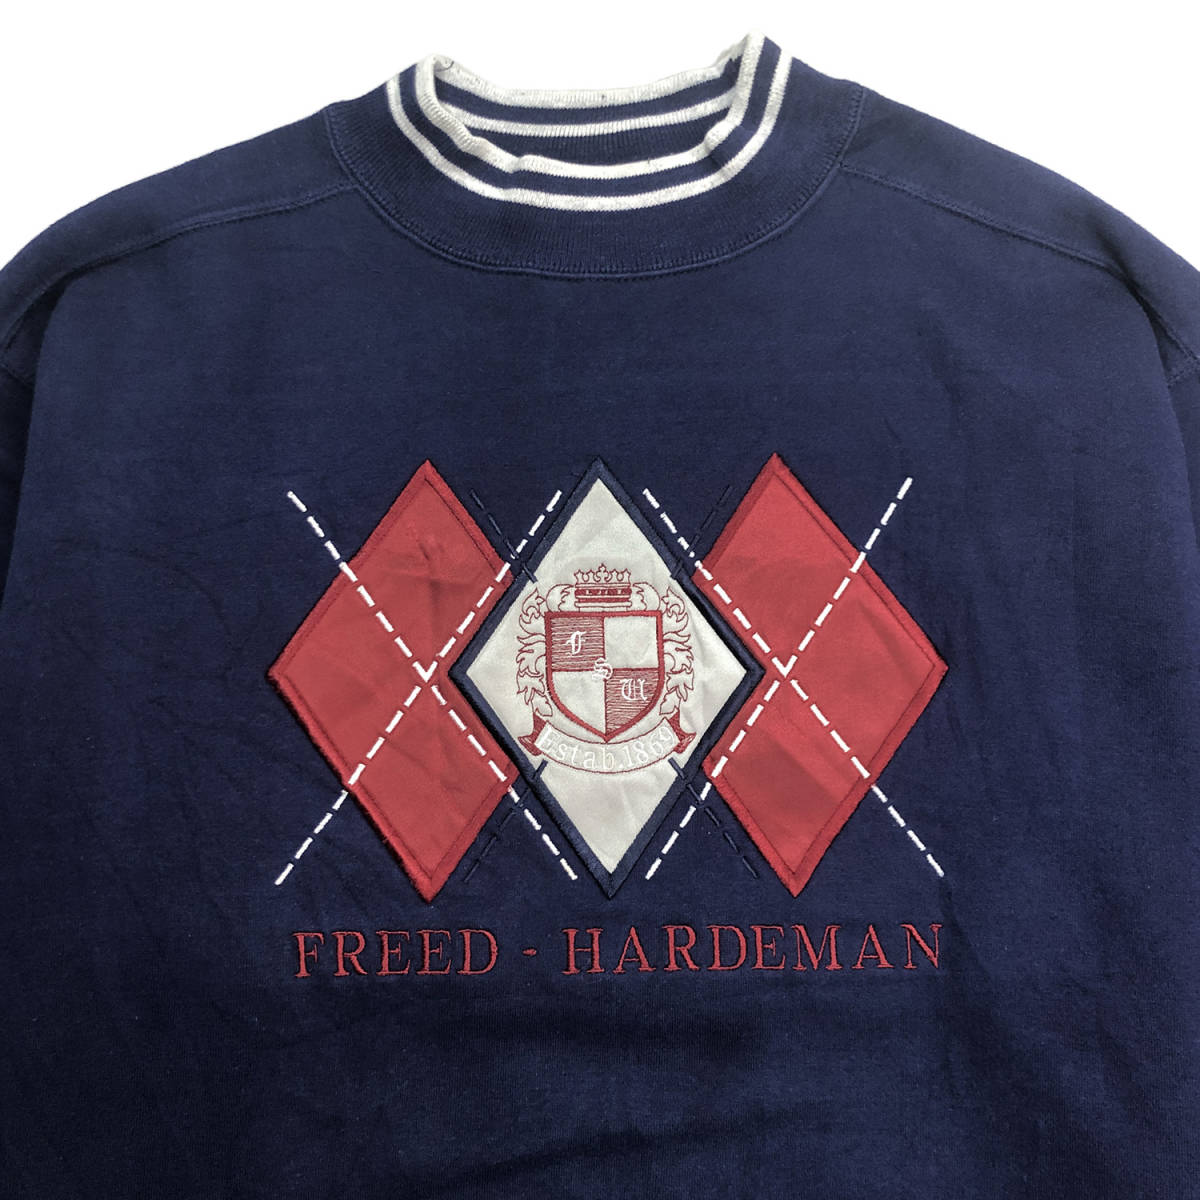 90S FREED HARDEMAN ヴィンテージ 刺繍ロゴ モックネック スウェット トレーナー ネイビー 紺色 メンズL 古着 BD1257